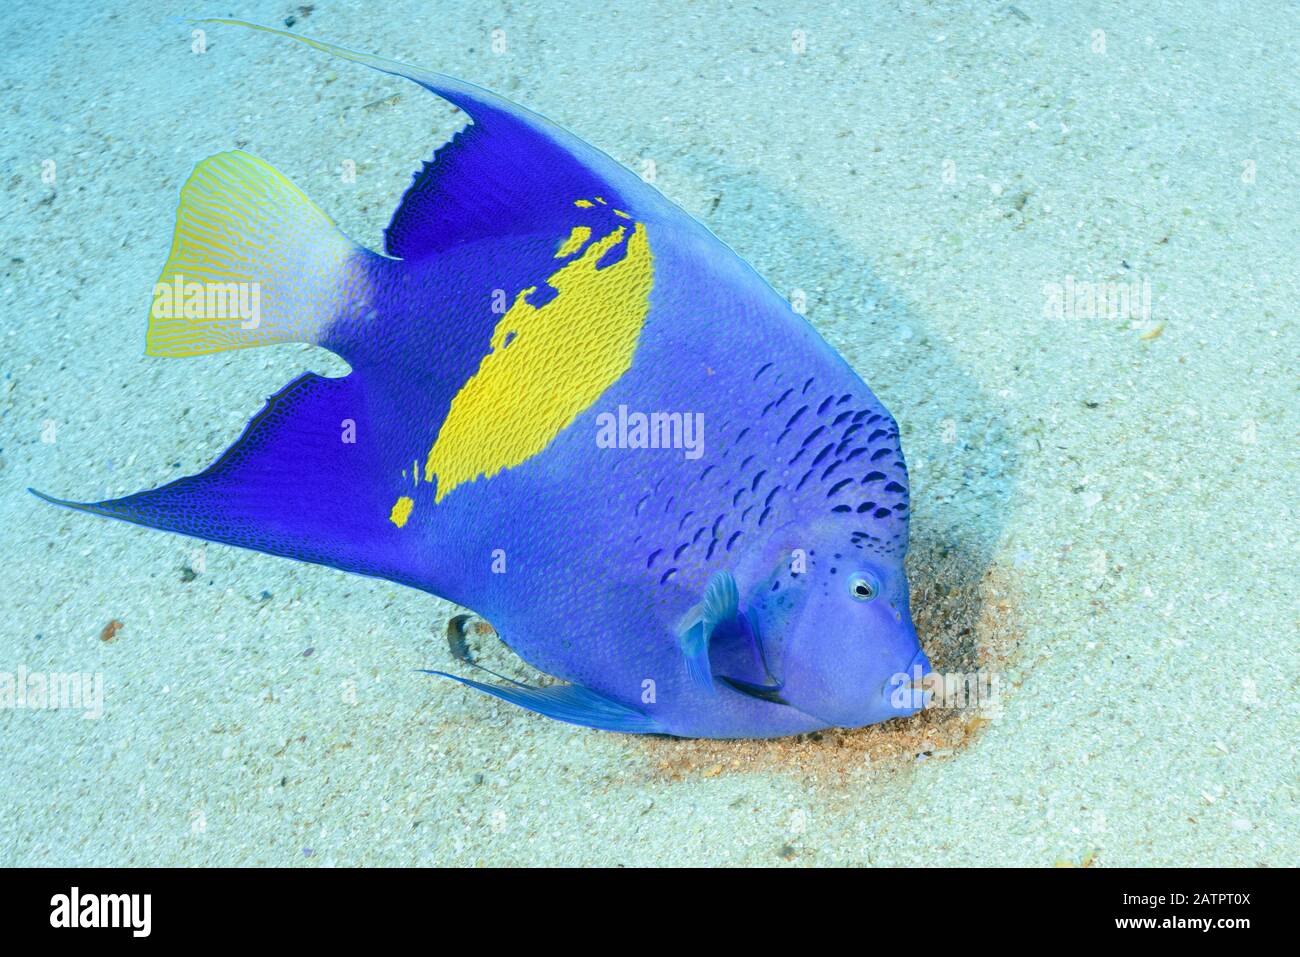 yellowbar angelfish, Pomacanthus maculosus, Marsa Alam, Wadi Gimal, Egypt, Red Sea, Indian Ocean Stock Photo